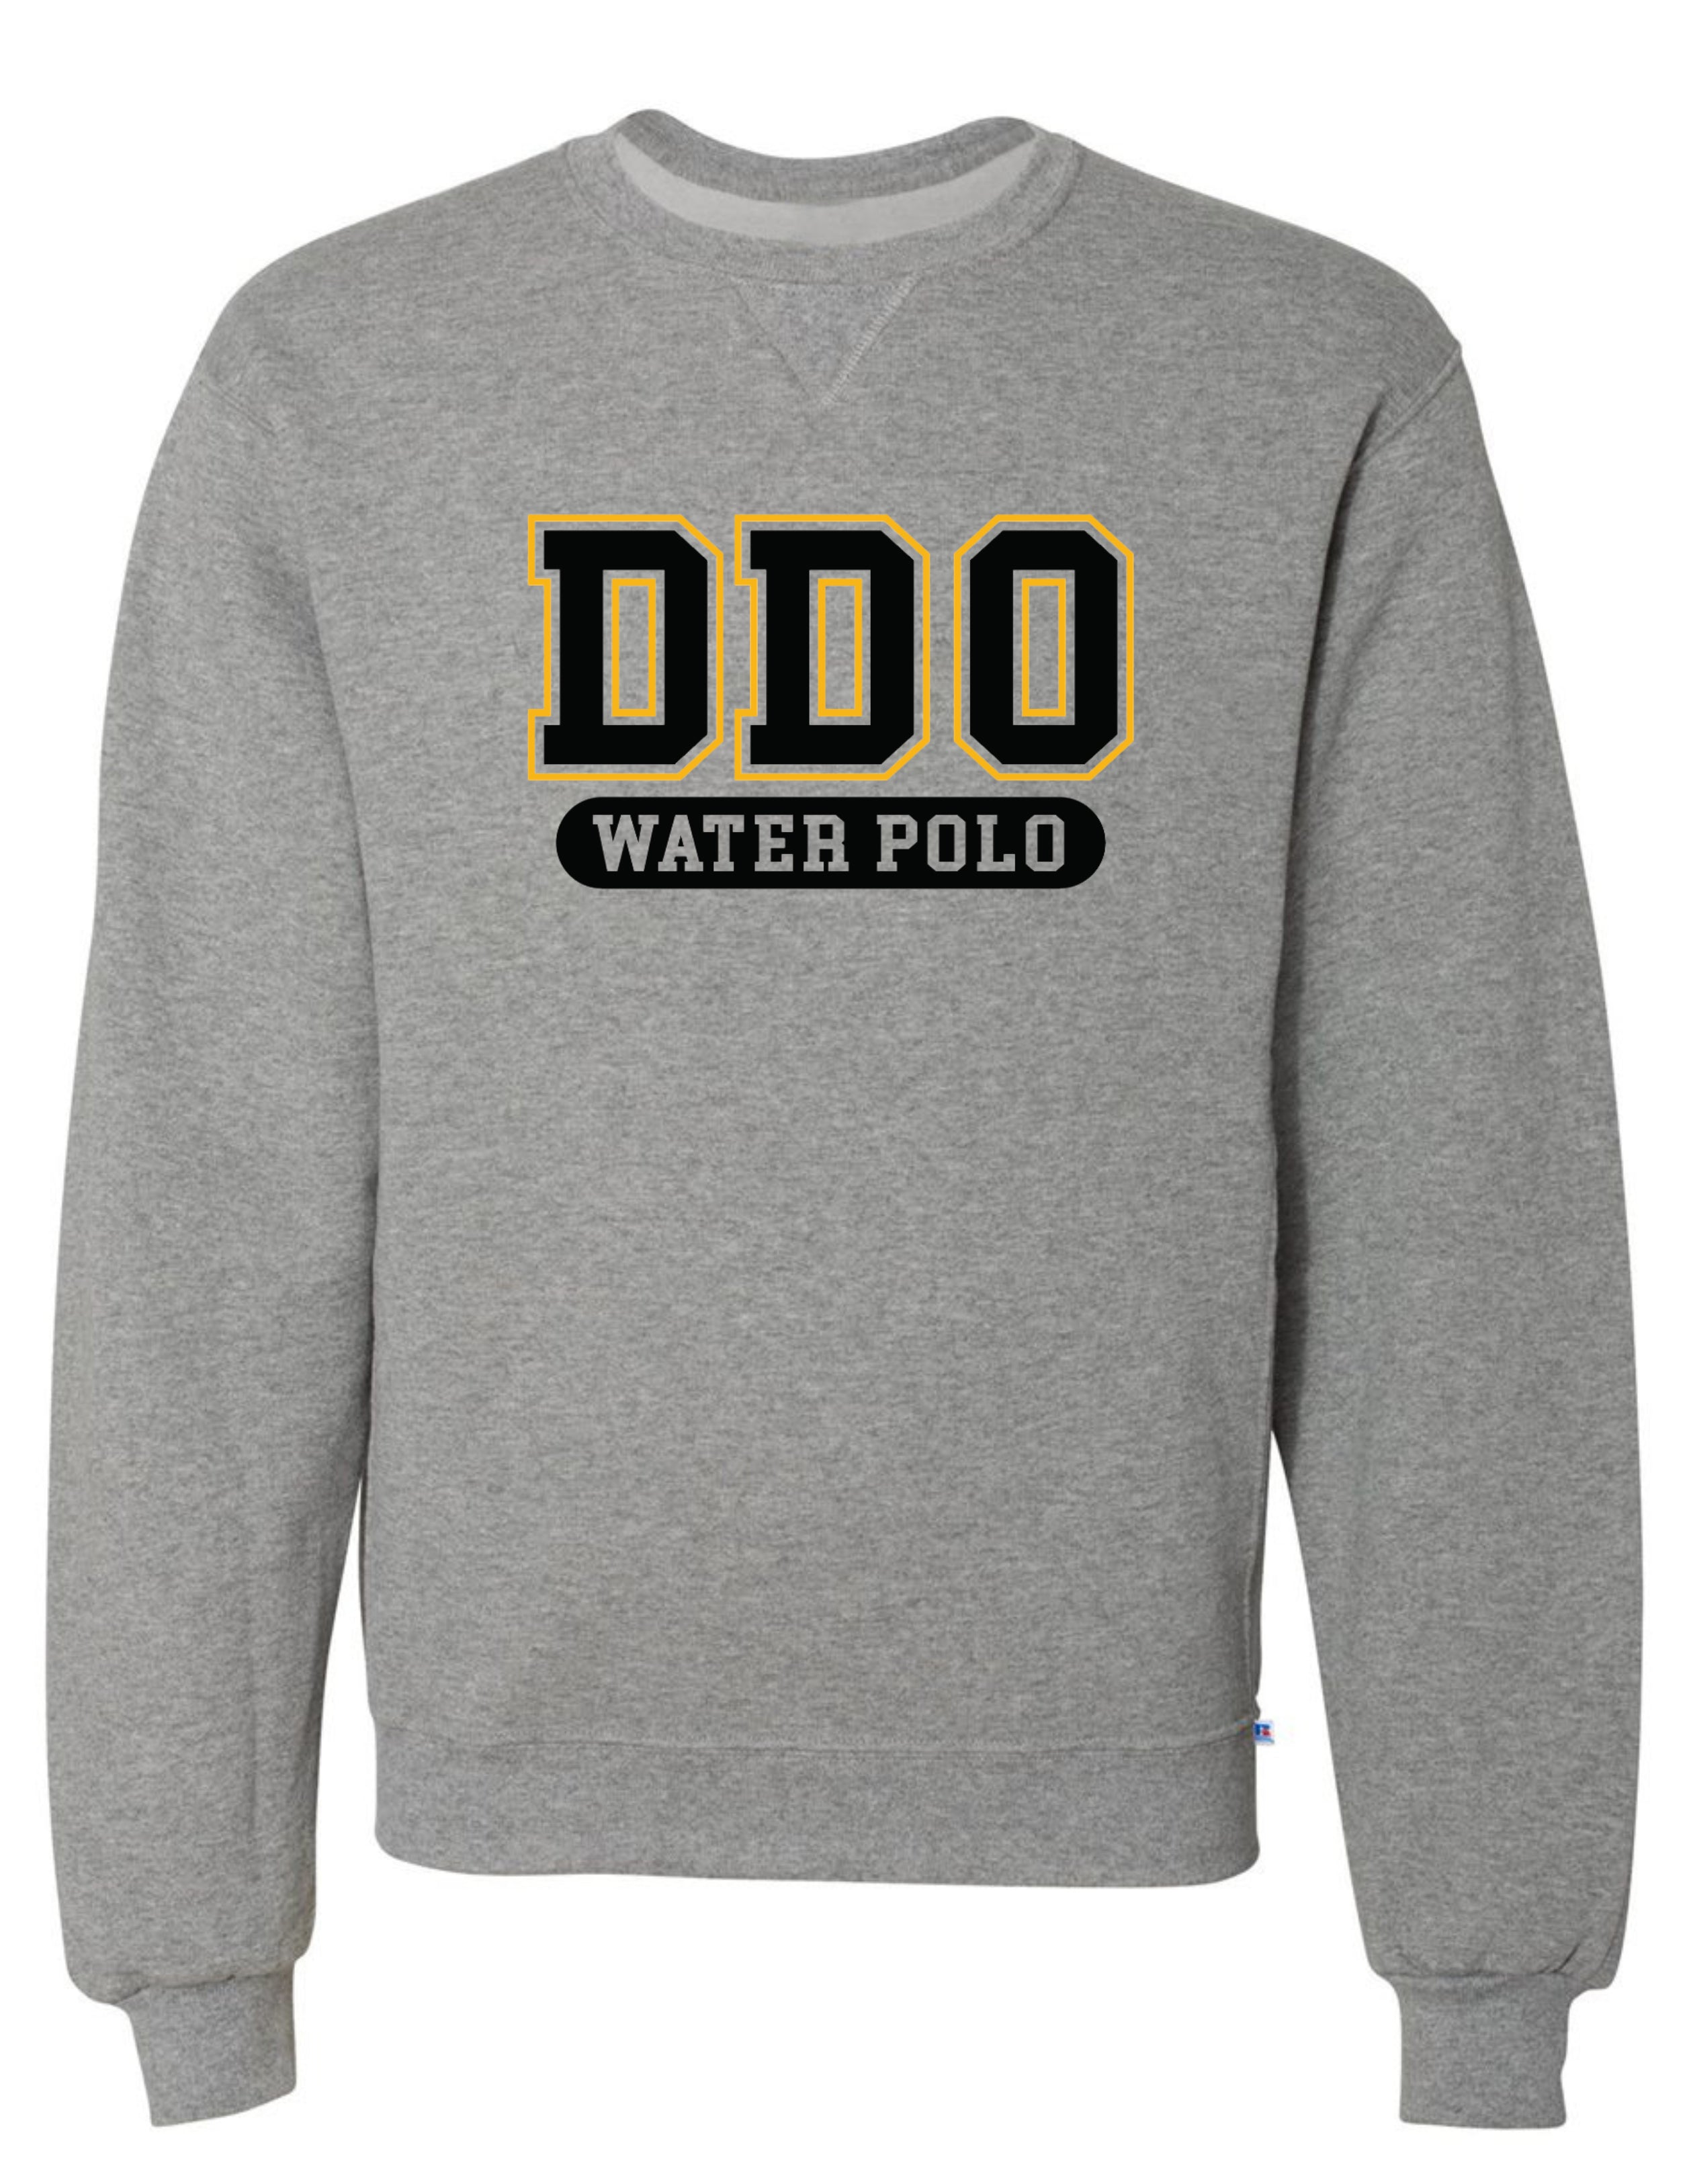 DDO Crewneck Sweatshirt